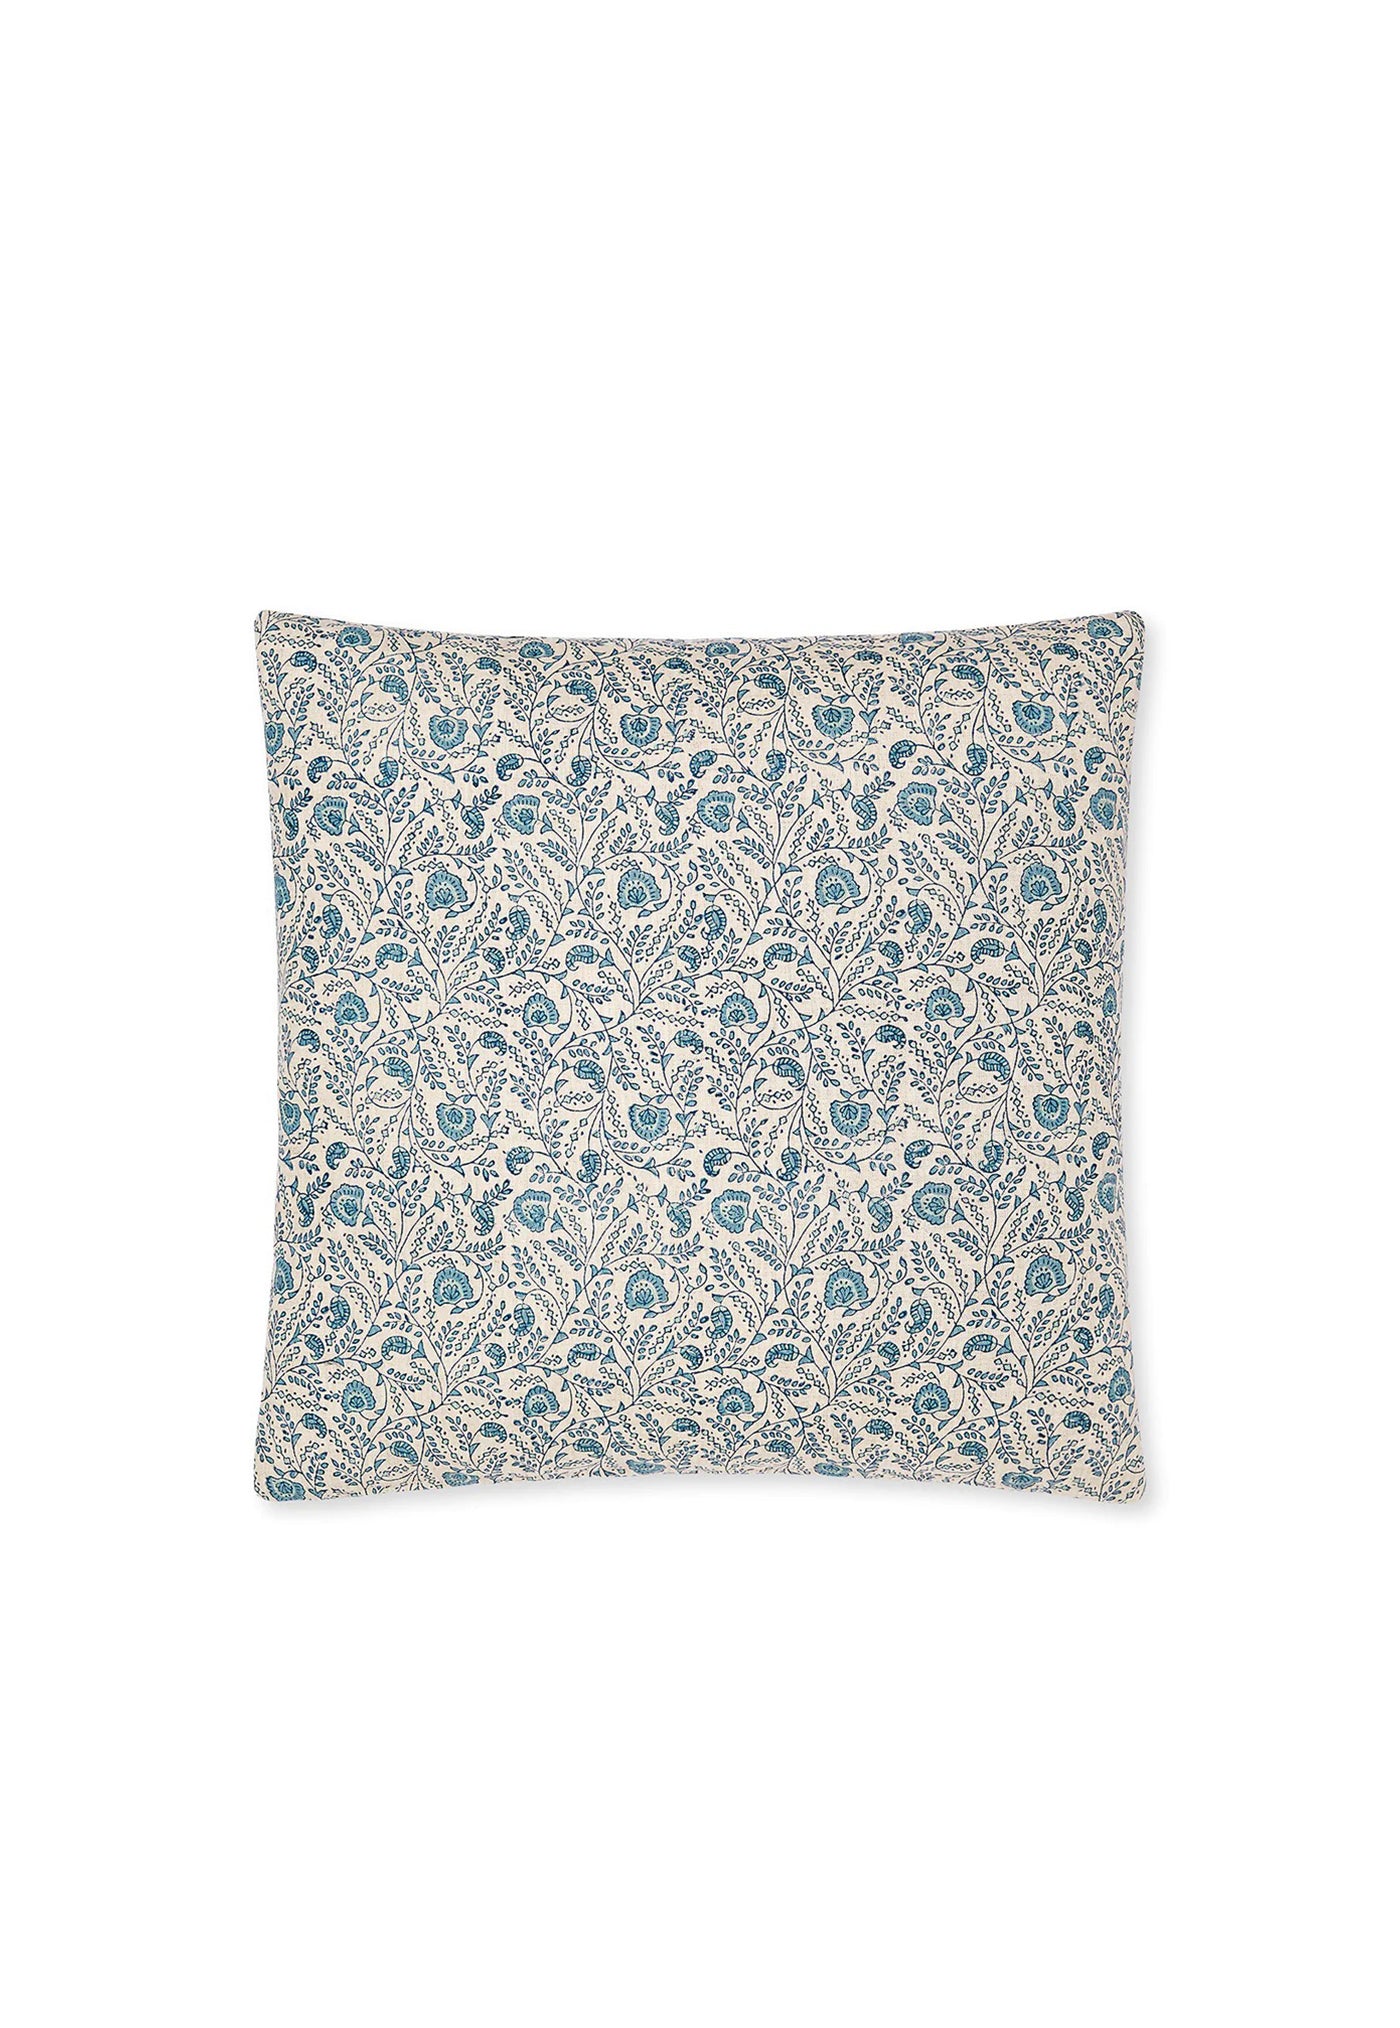 Pali Fresh Azure Linen Cushion 50x50 sold by Angel Divine